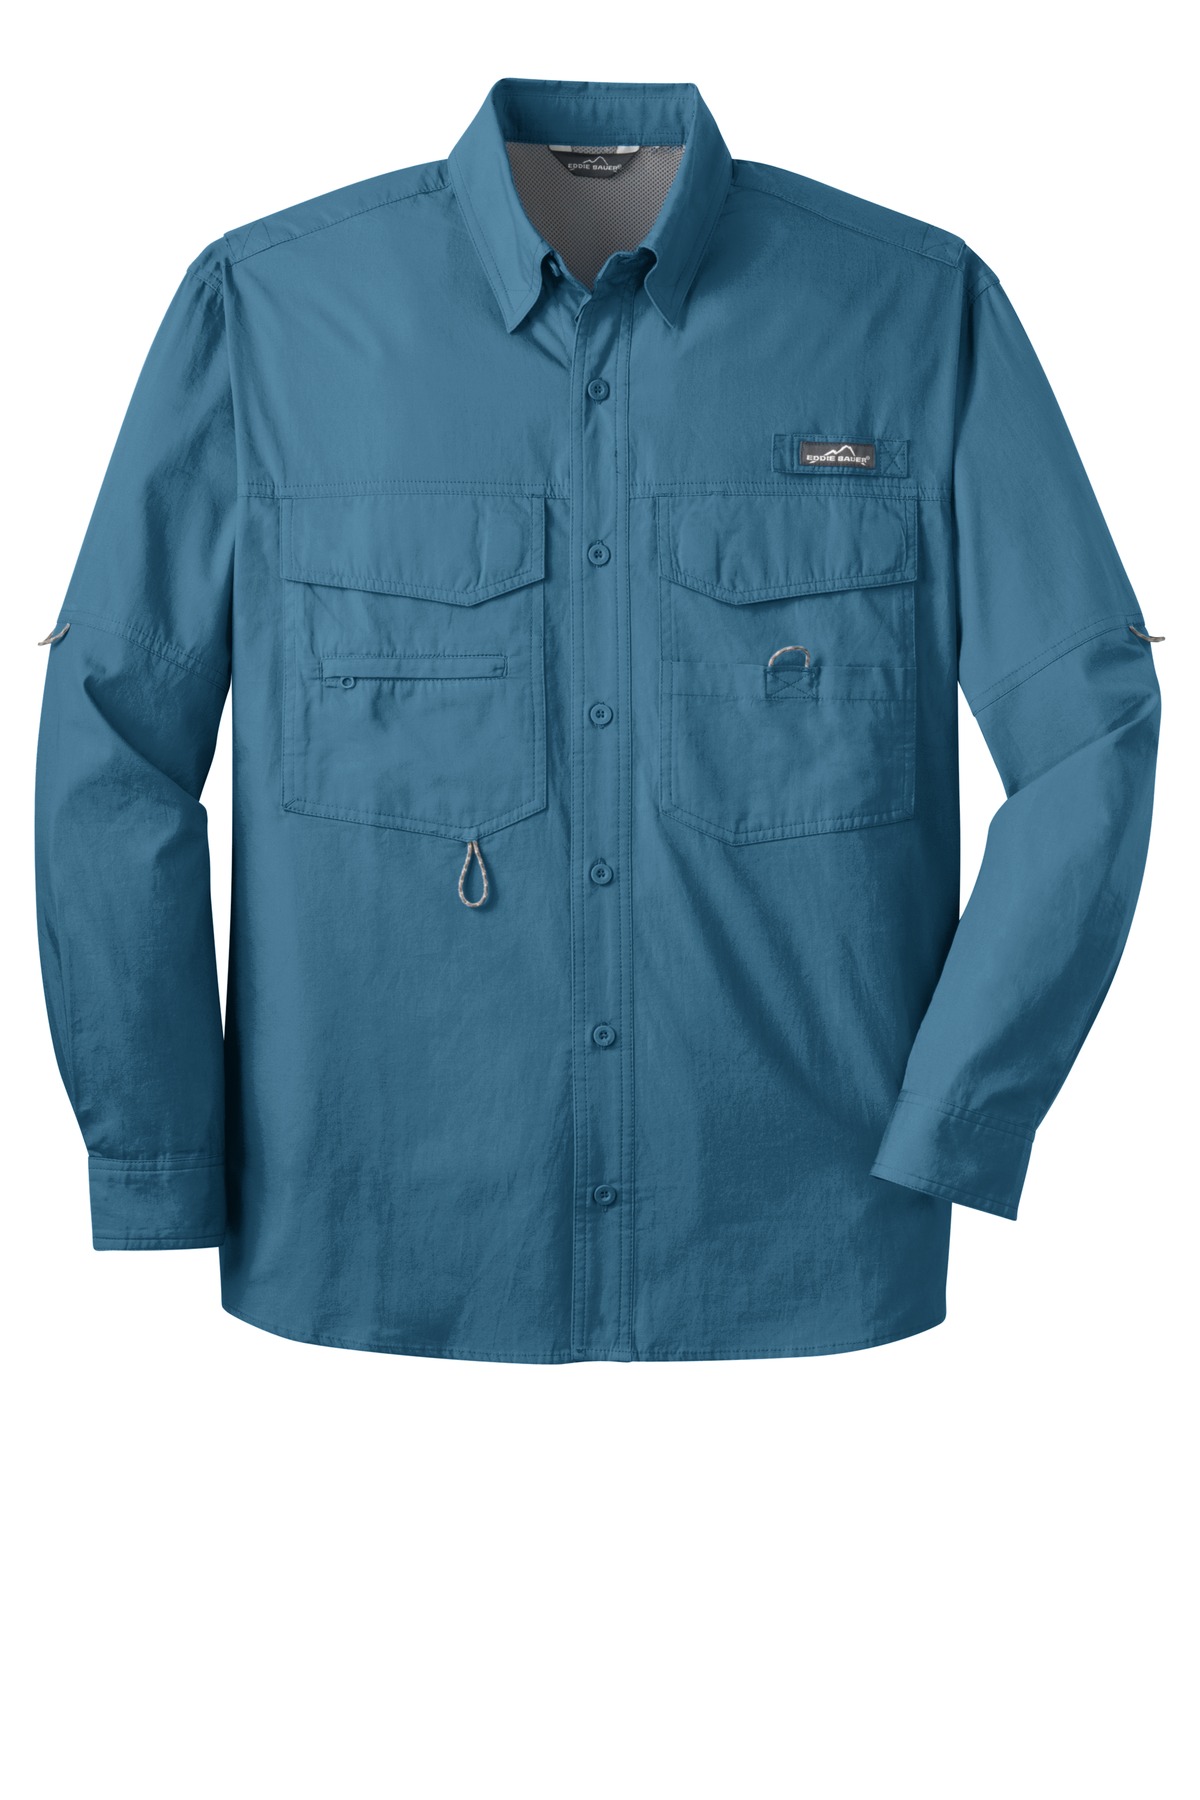 Eddie Bauer – Long Sleeve Fishing Shirt. EB606 – Dynasty Custom